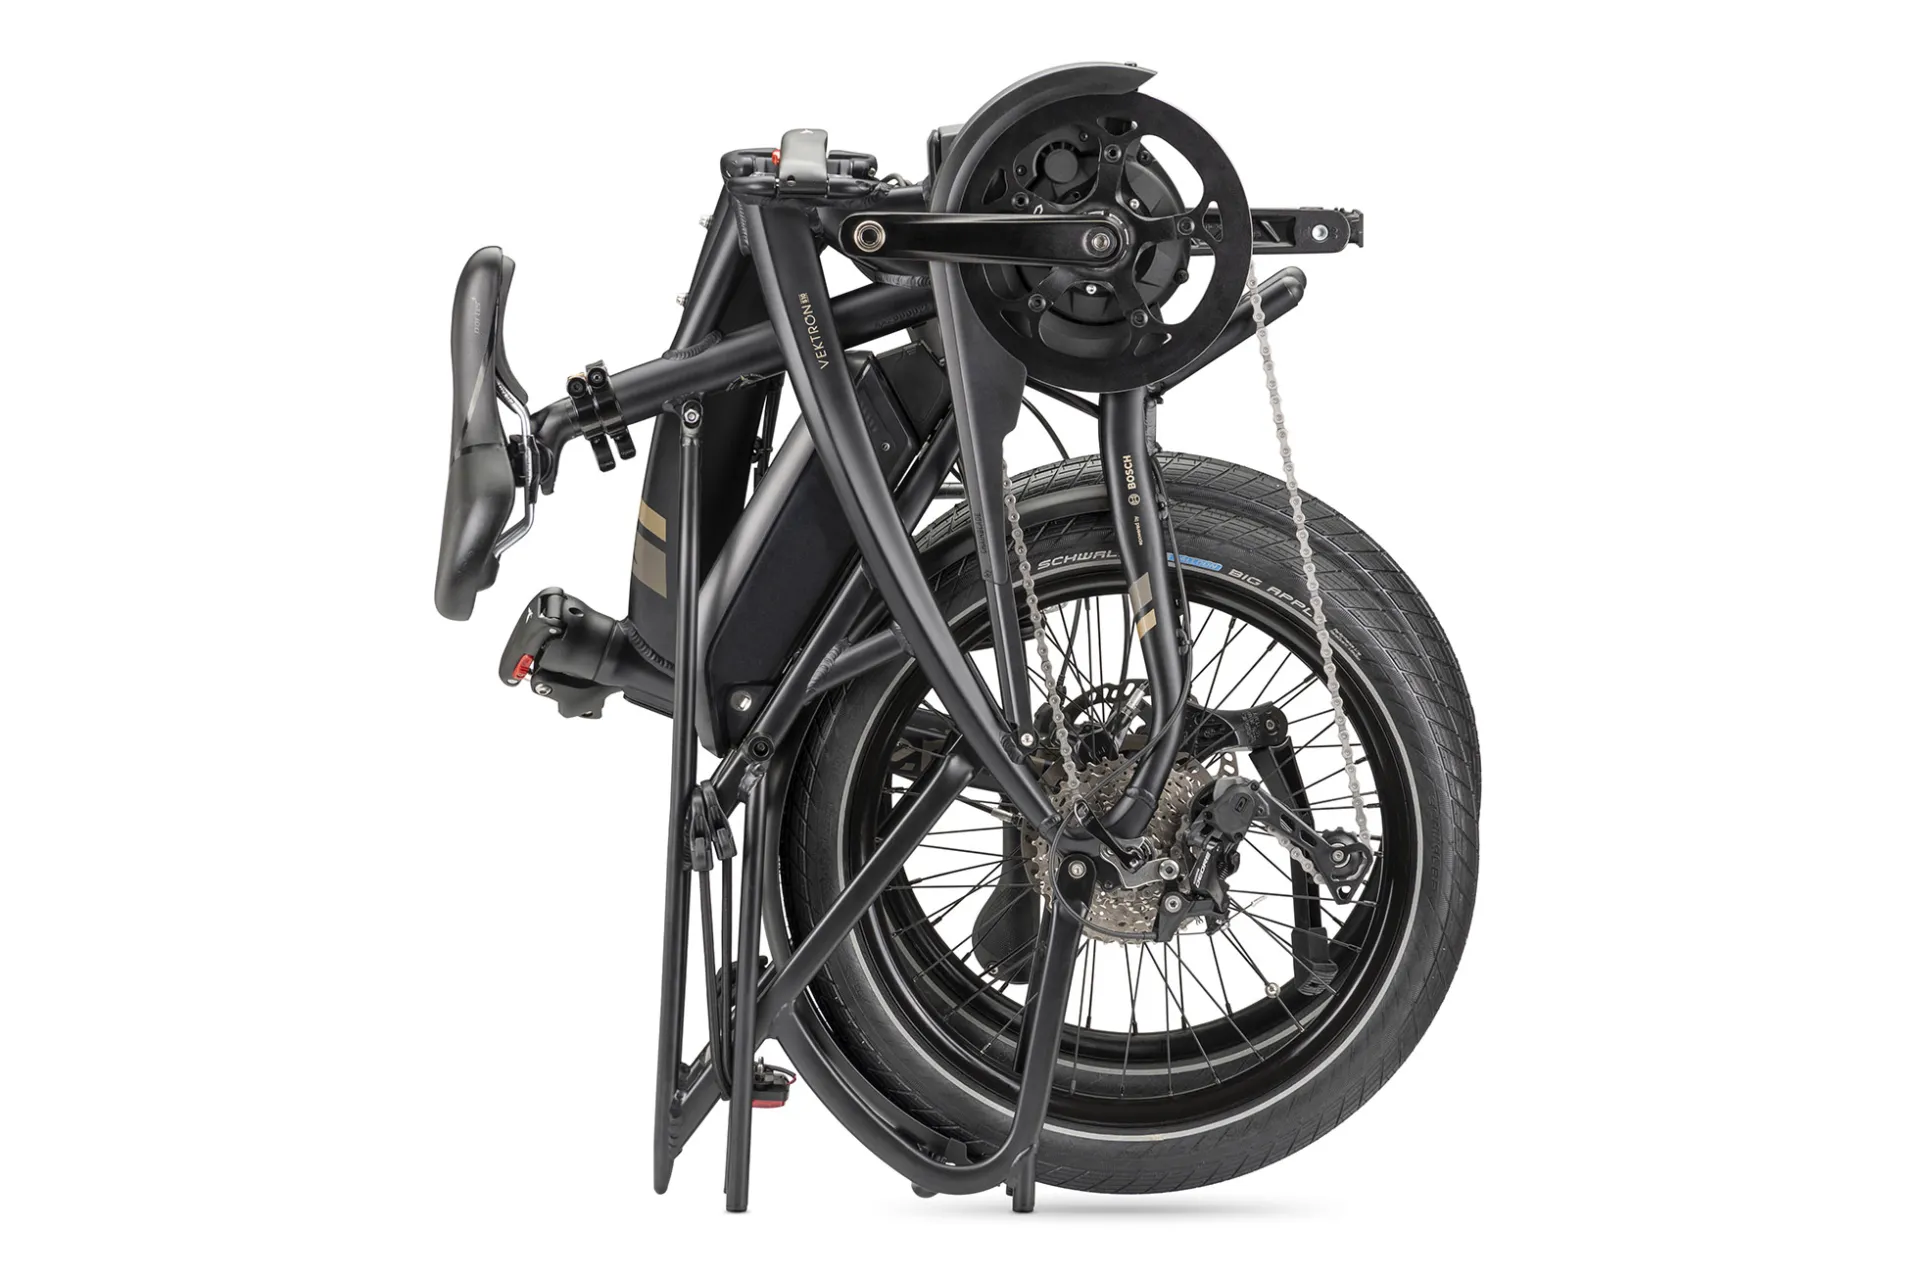 Vektron S10: Our Best Bosch Folding Electric Bike | Tern Bicycles